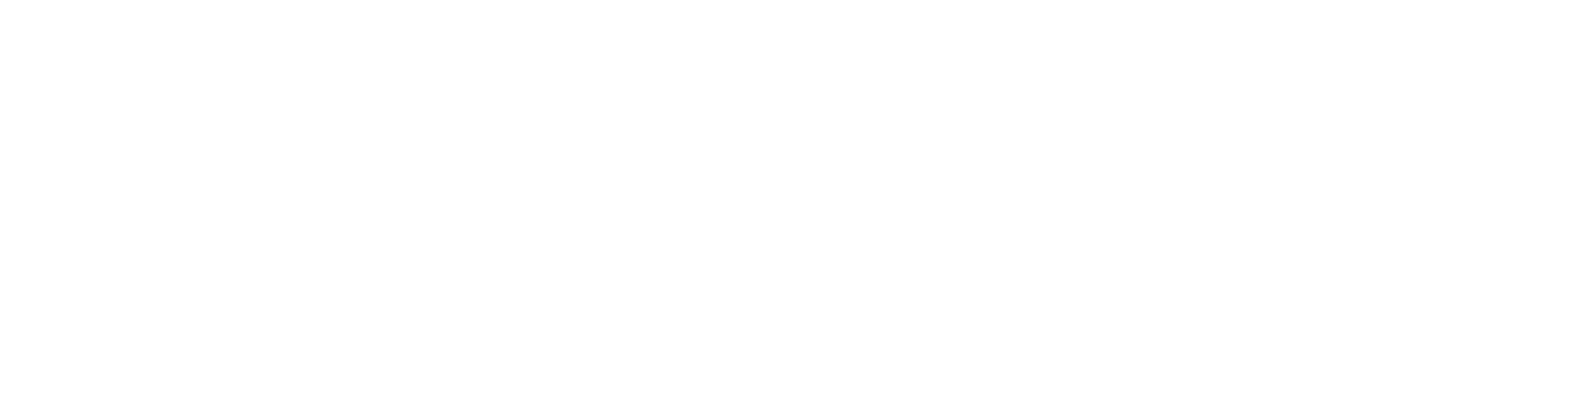 Ventas Logo groß für dunkle Hintergründe (transparentes PNG)